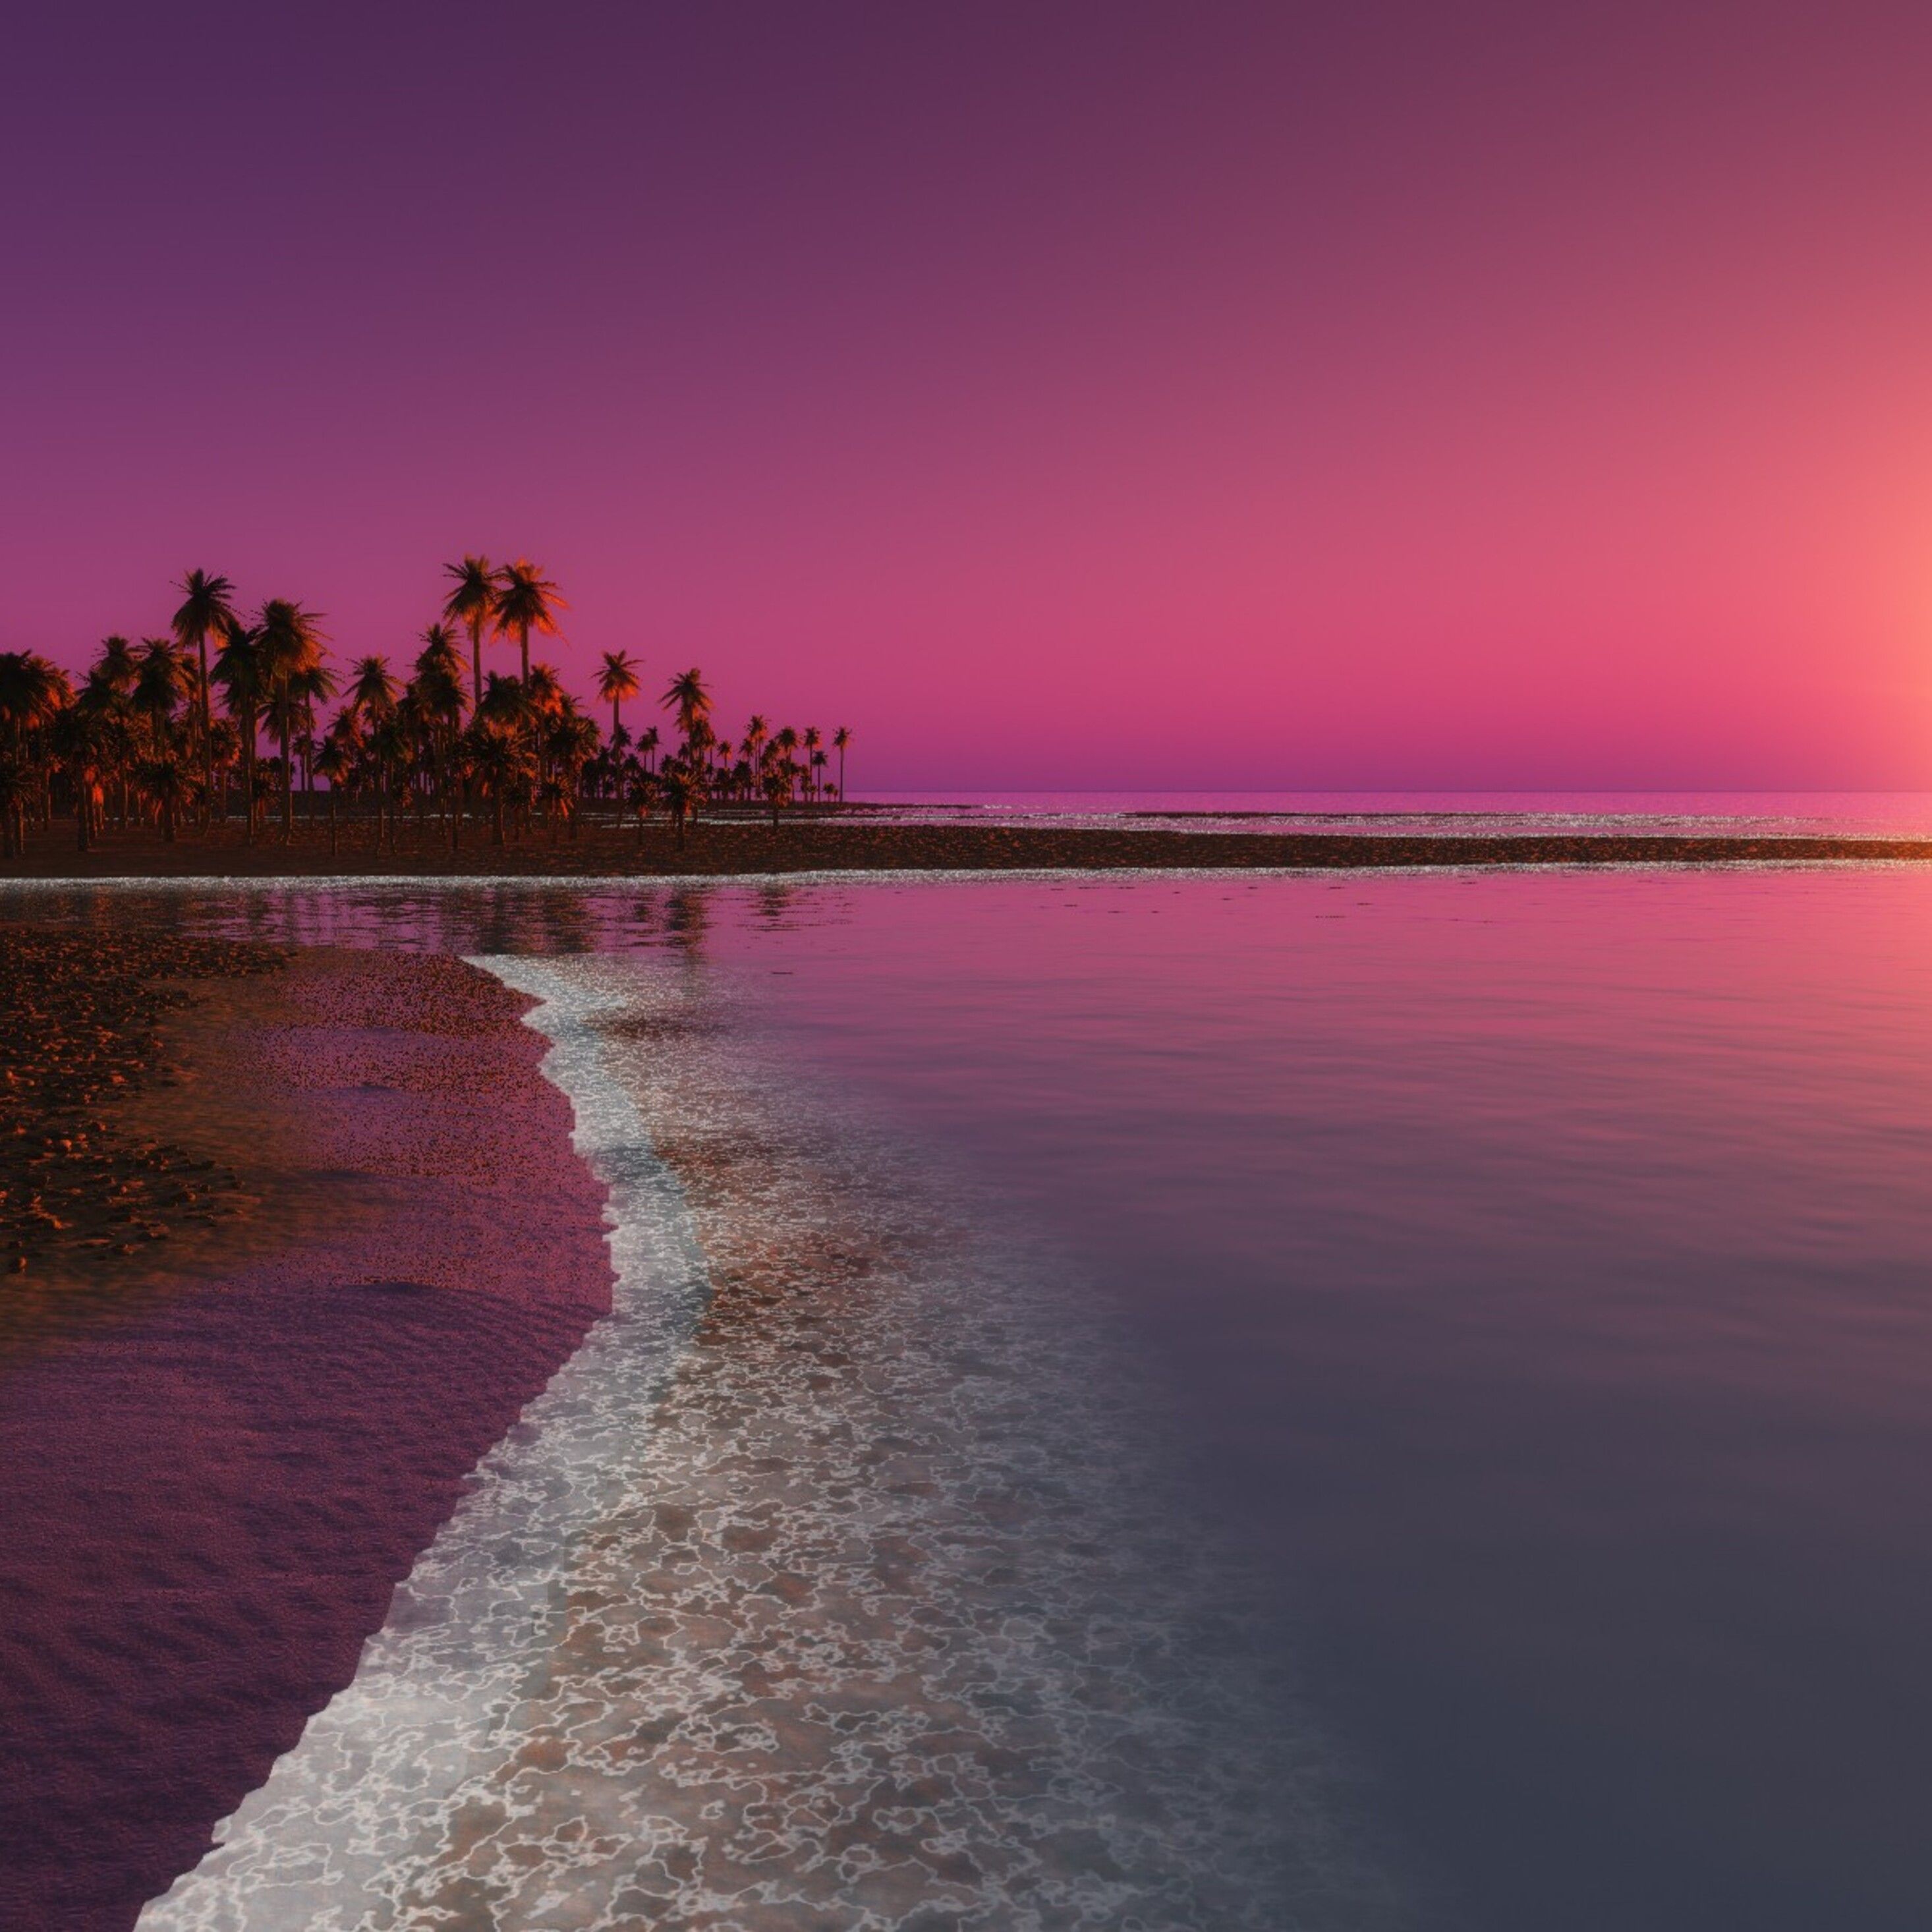 Digital Coastal Beach Sunset iPad Pro Retina Display HD 4k Wallpaper, Image, Background, Photo and Picture